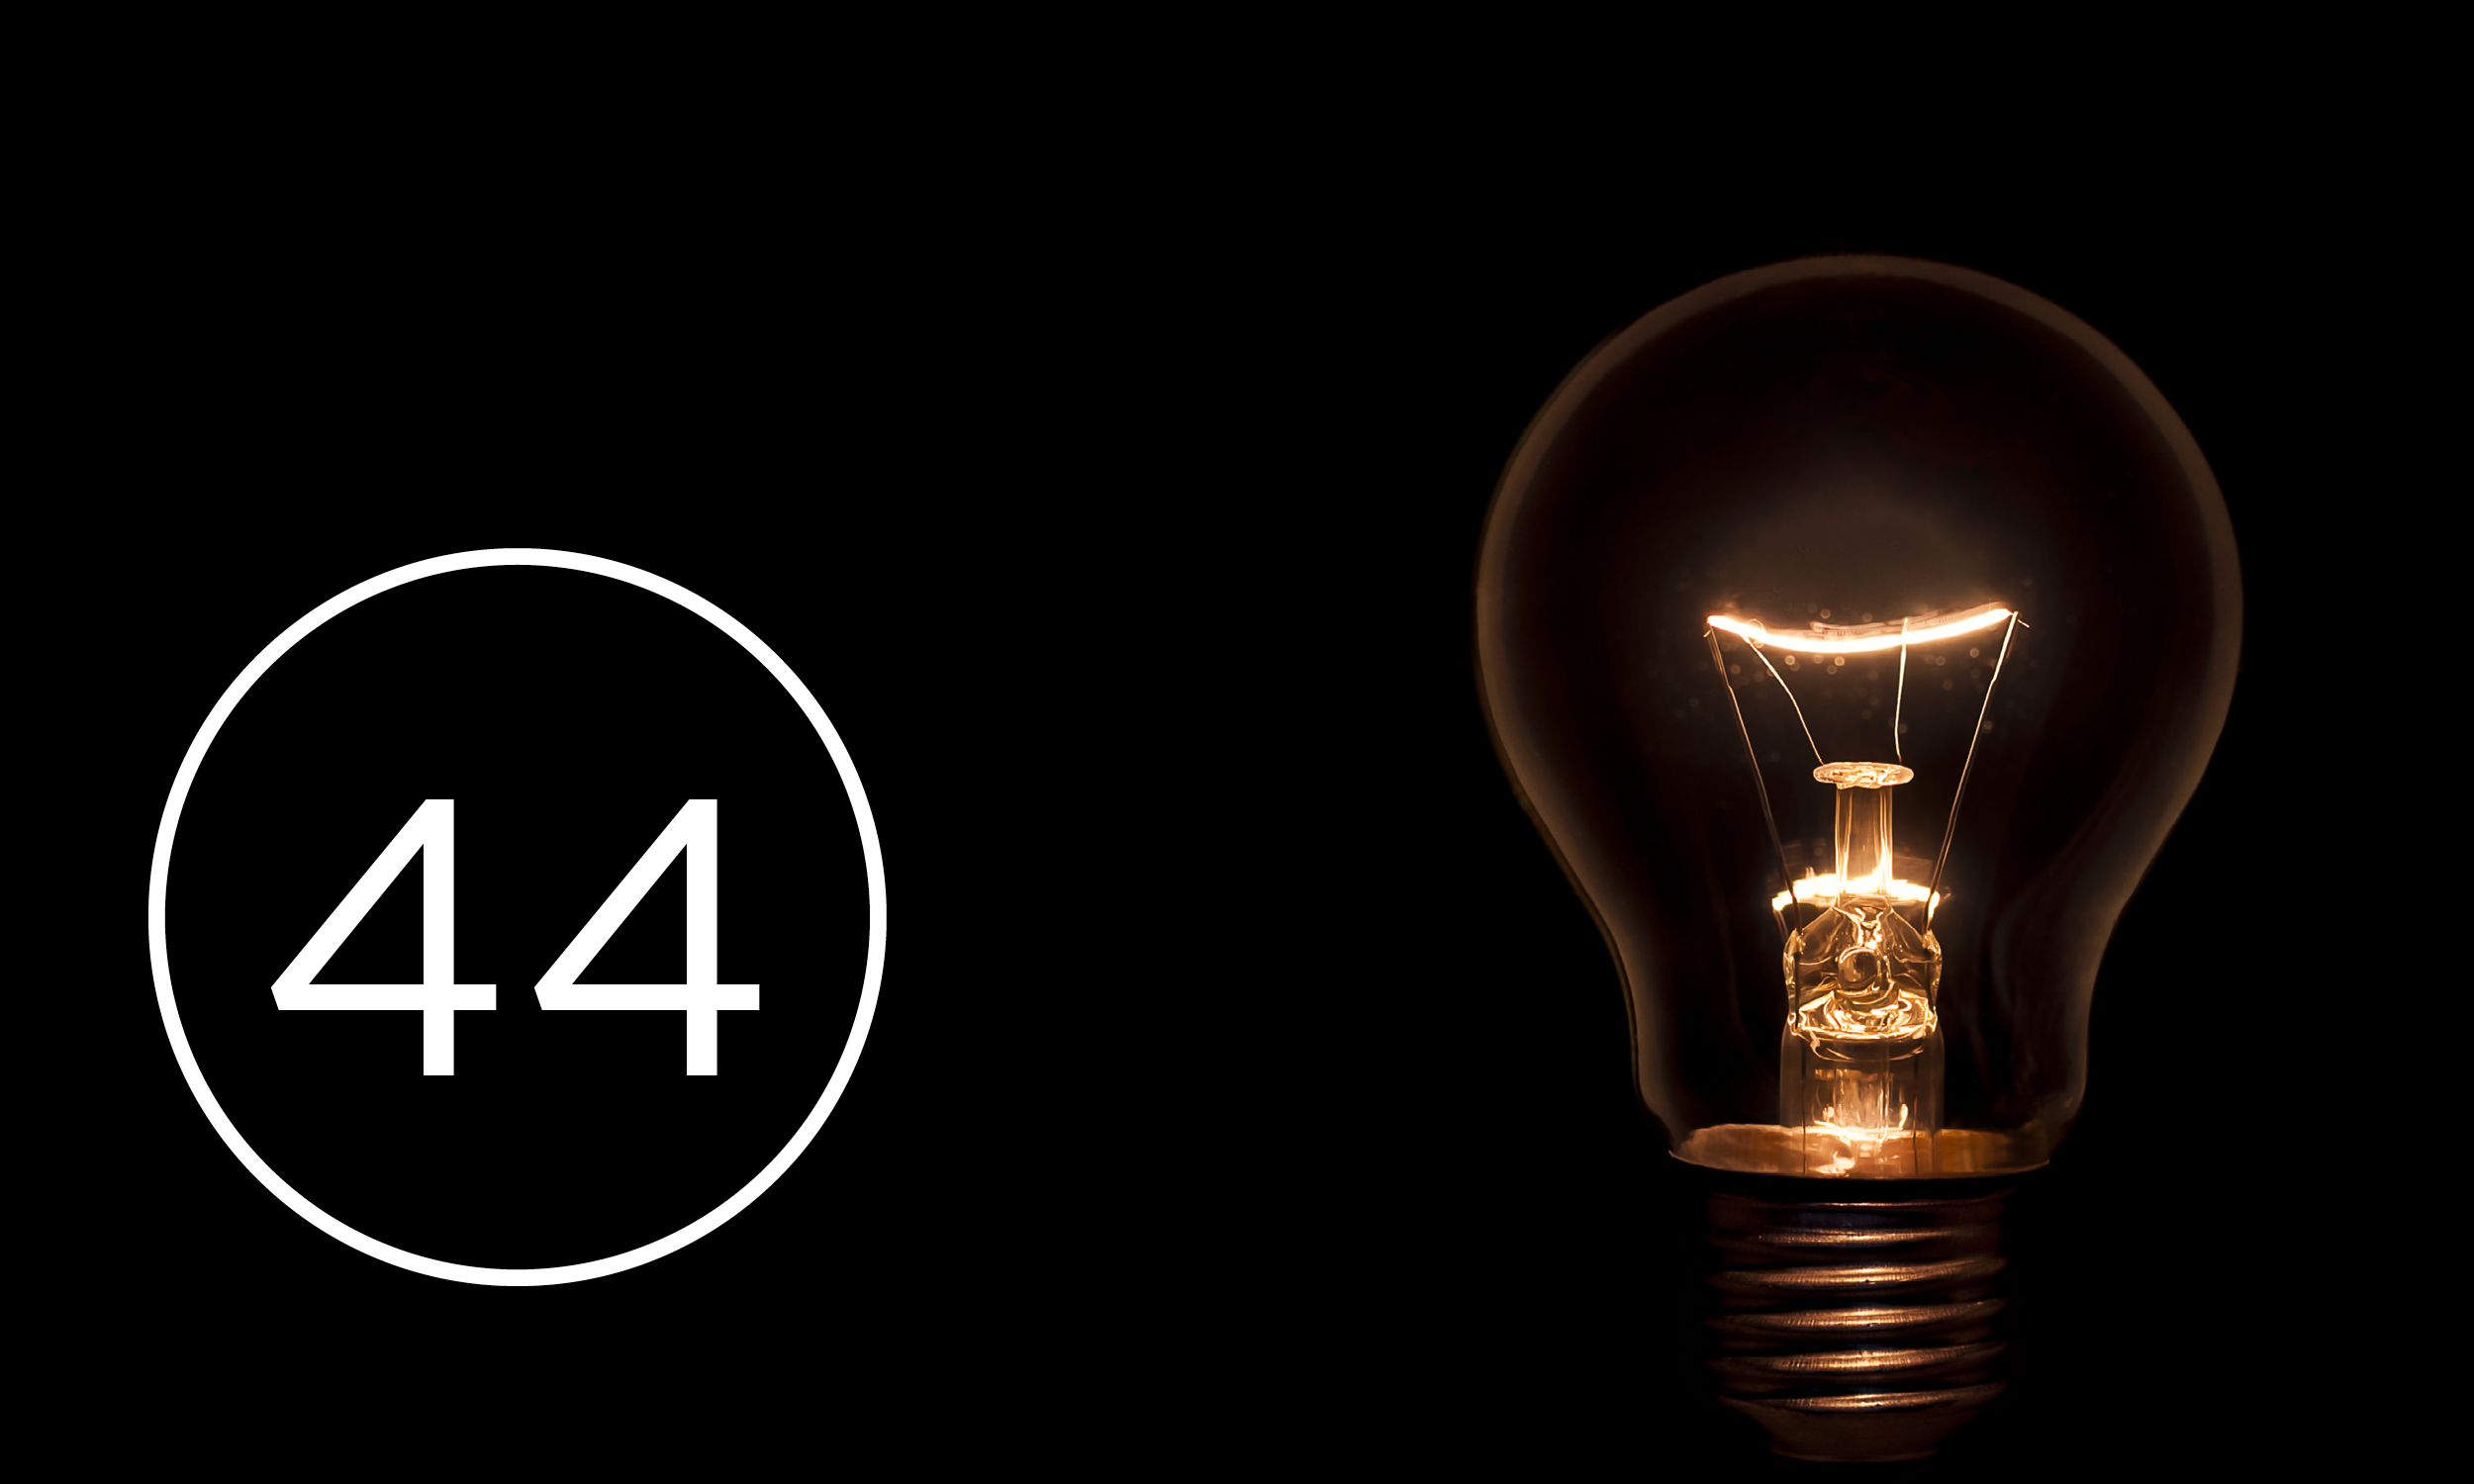 Lightbulb on dark background with number 44